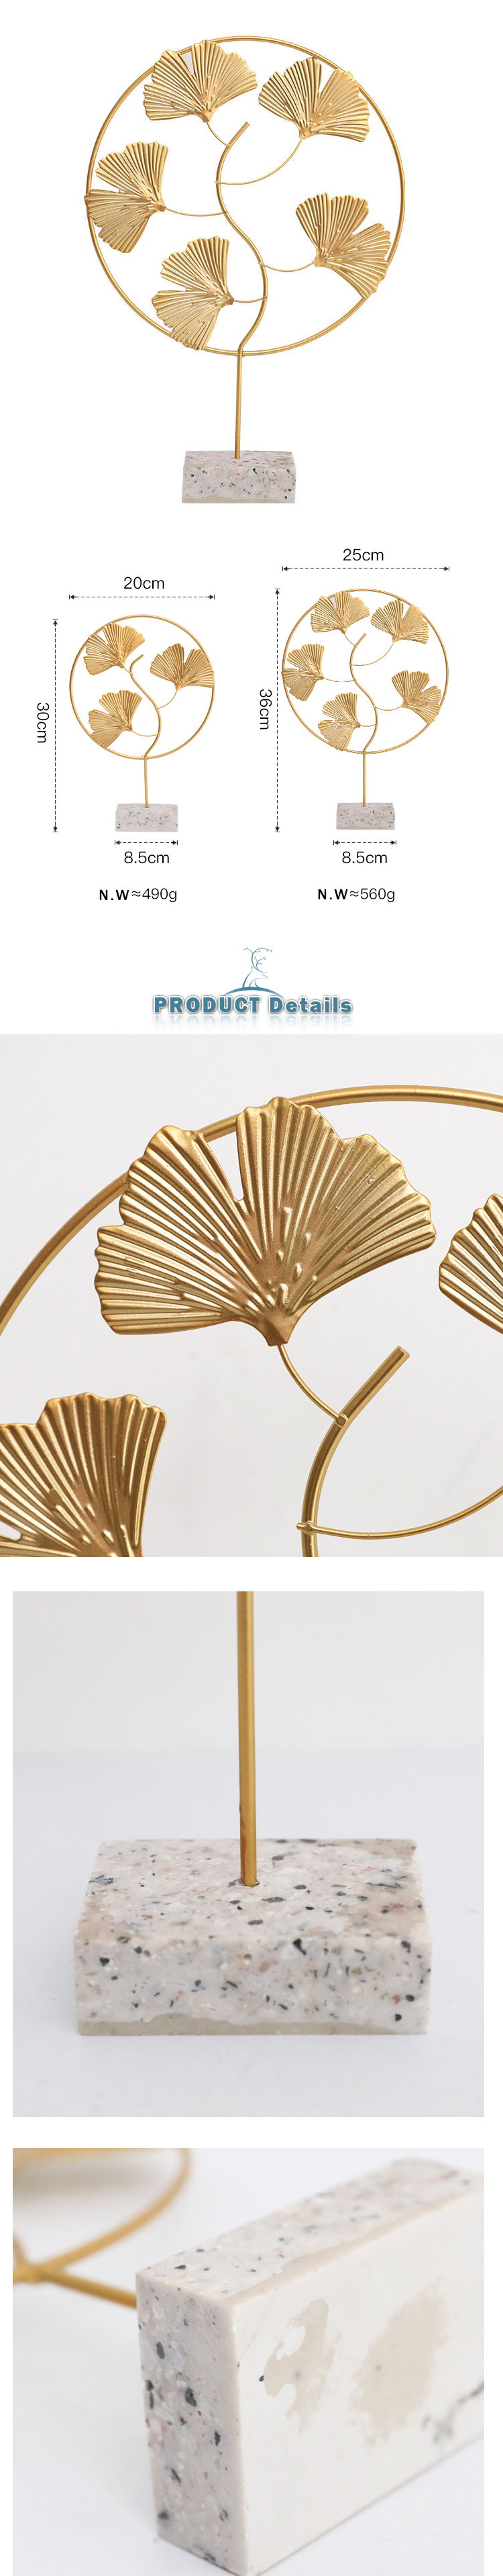 crafts gold Iron ginkgo leaves modern ornament bedroom home decoration accessories for living room desktop decor